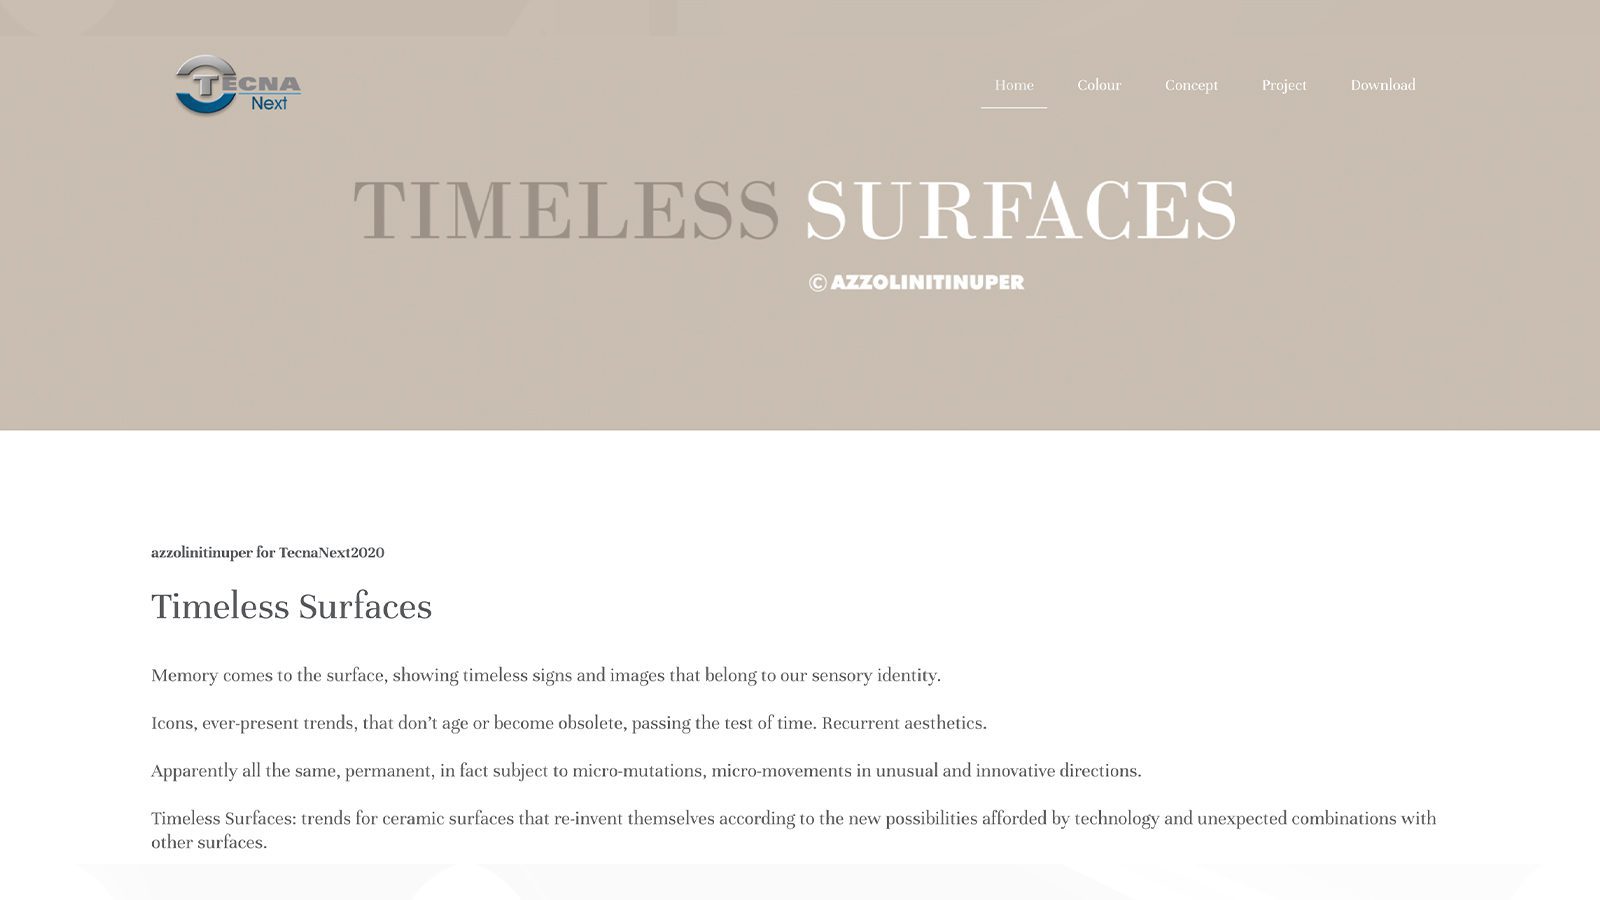 tecna-next-timeless-surfaces